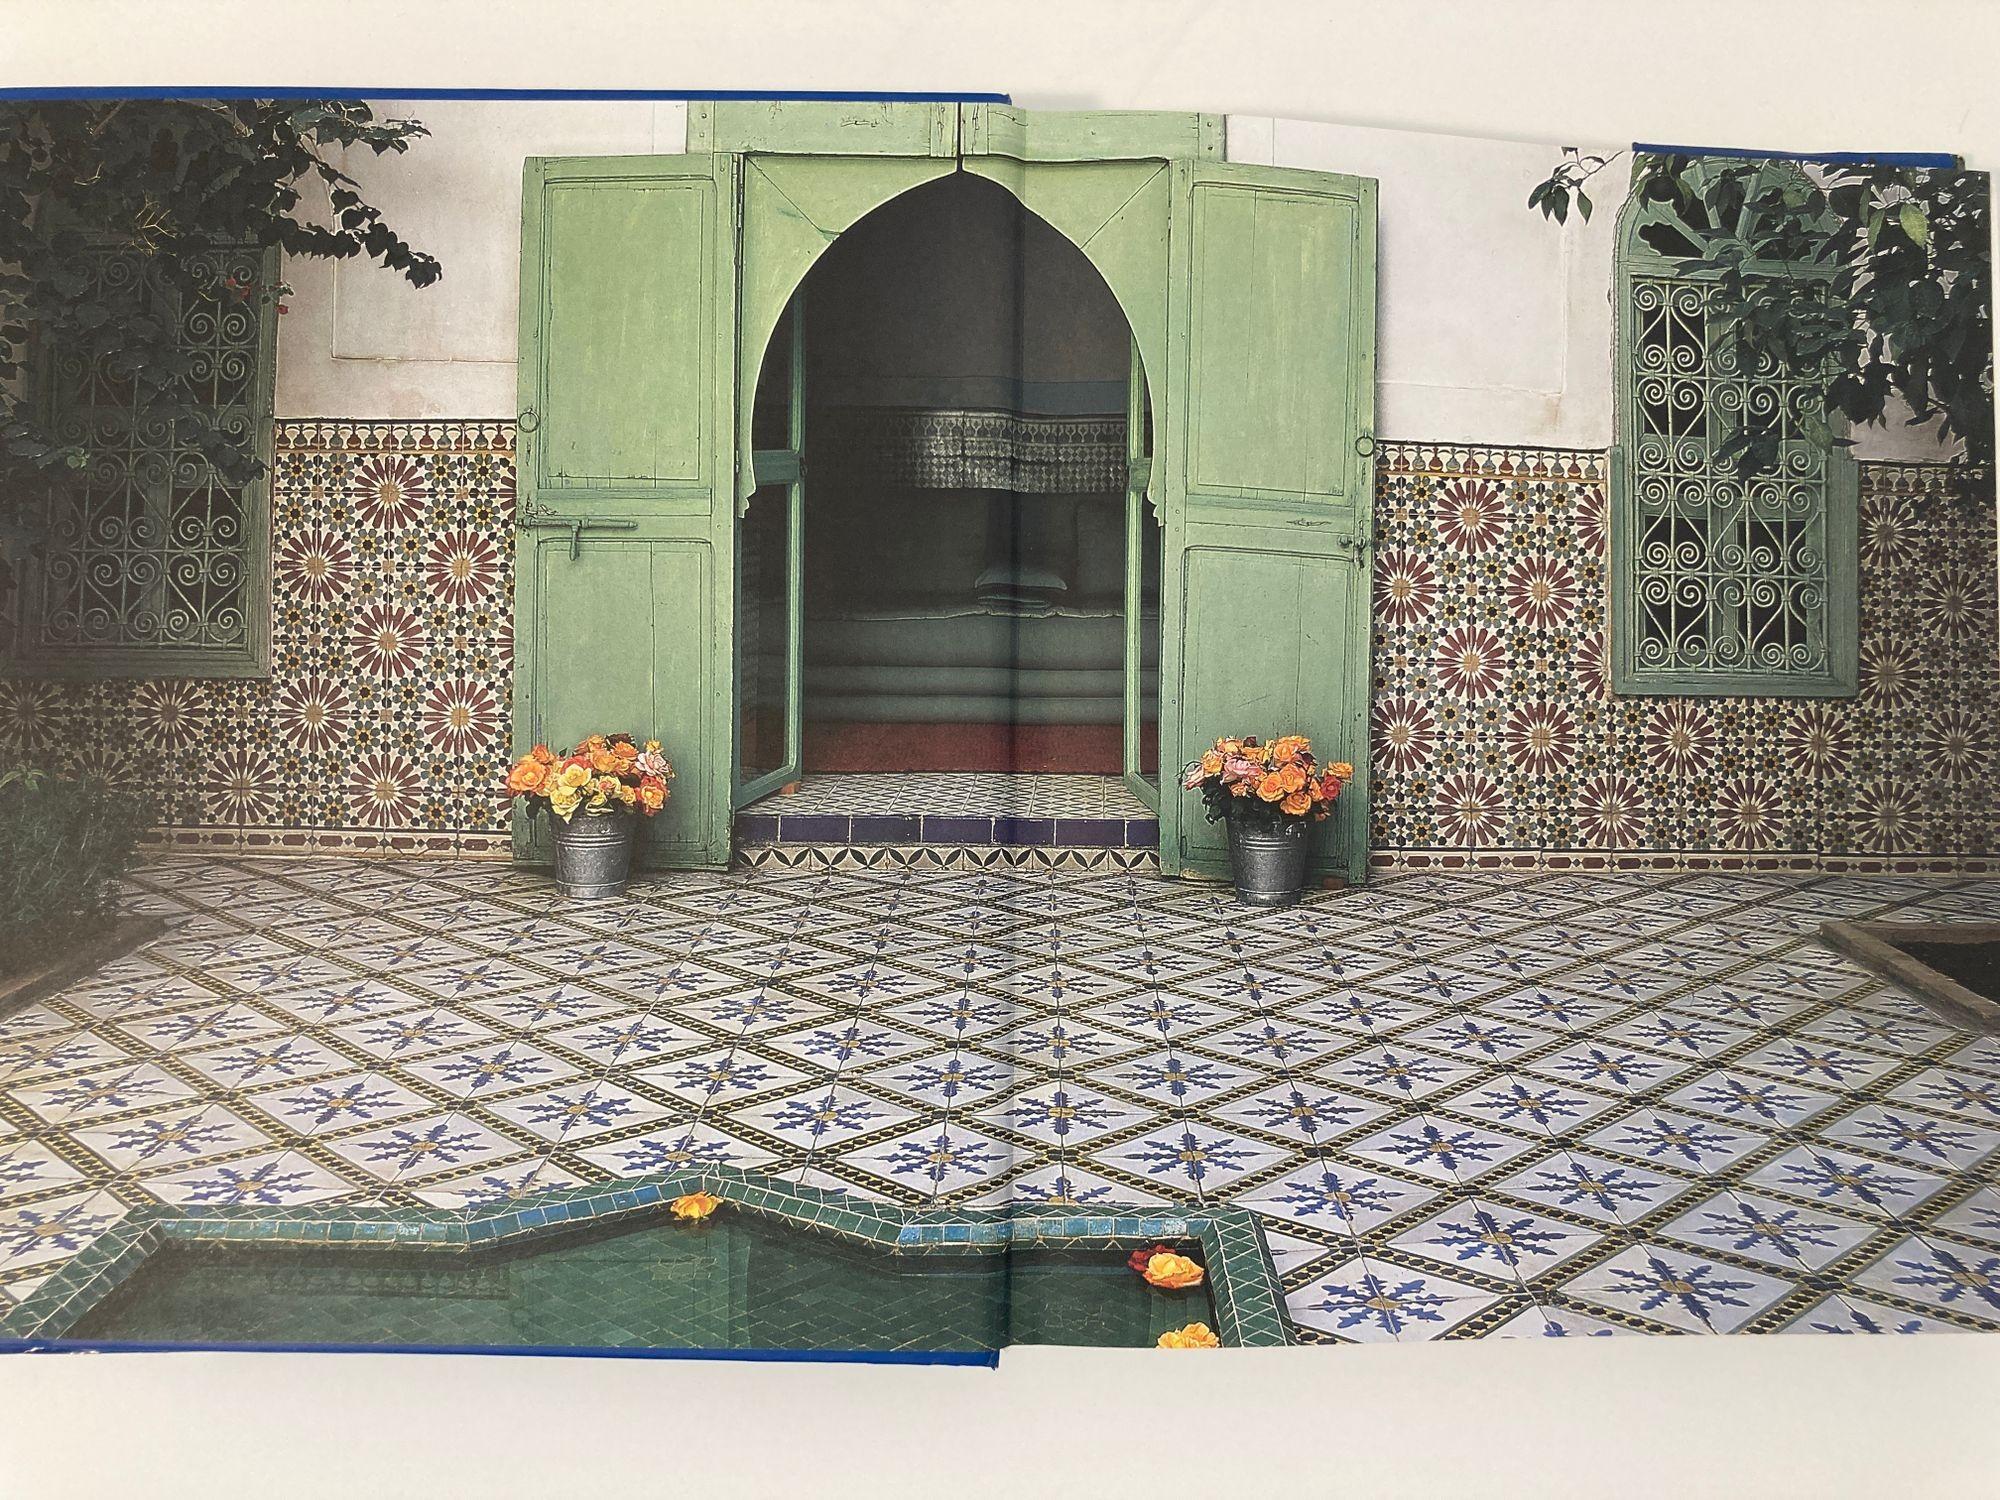 Contemporary Living in Morocco Vivre au Maroc Hardcover Book – June 5, 2003